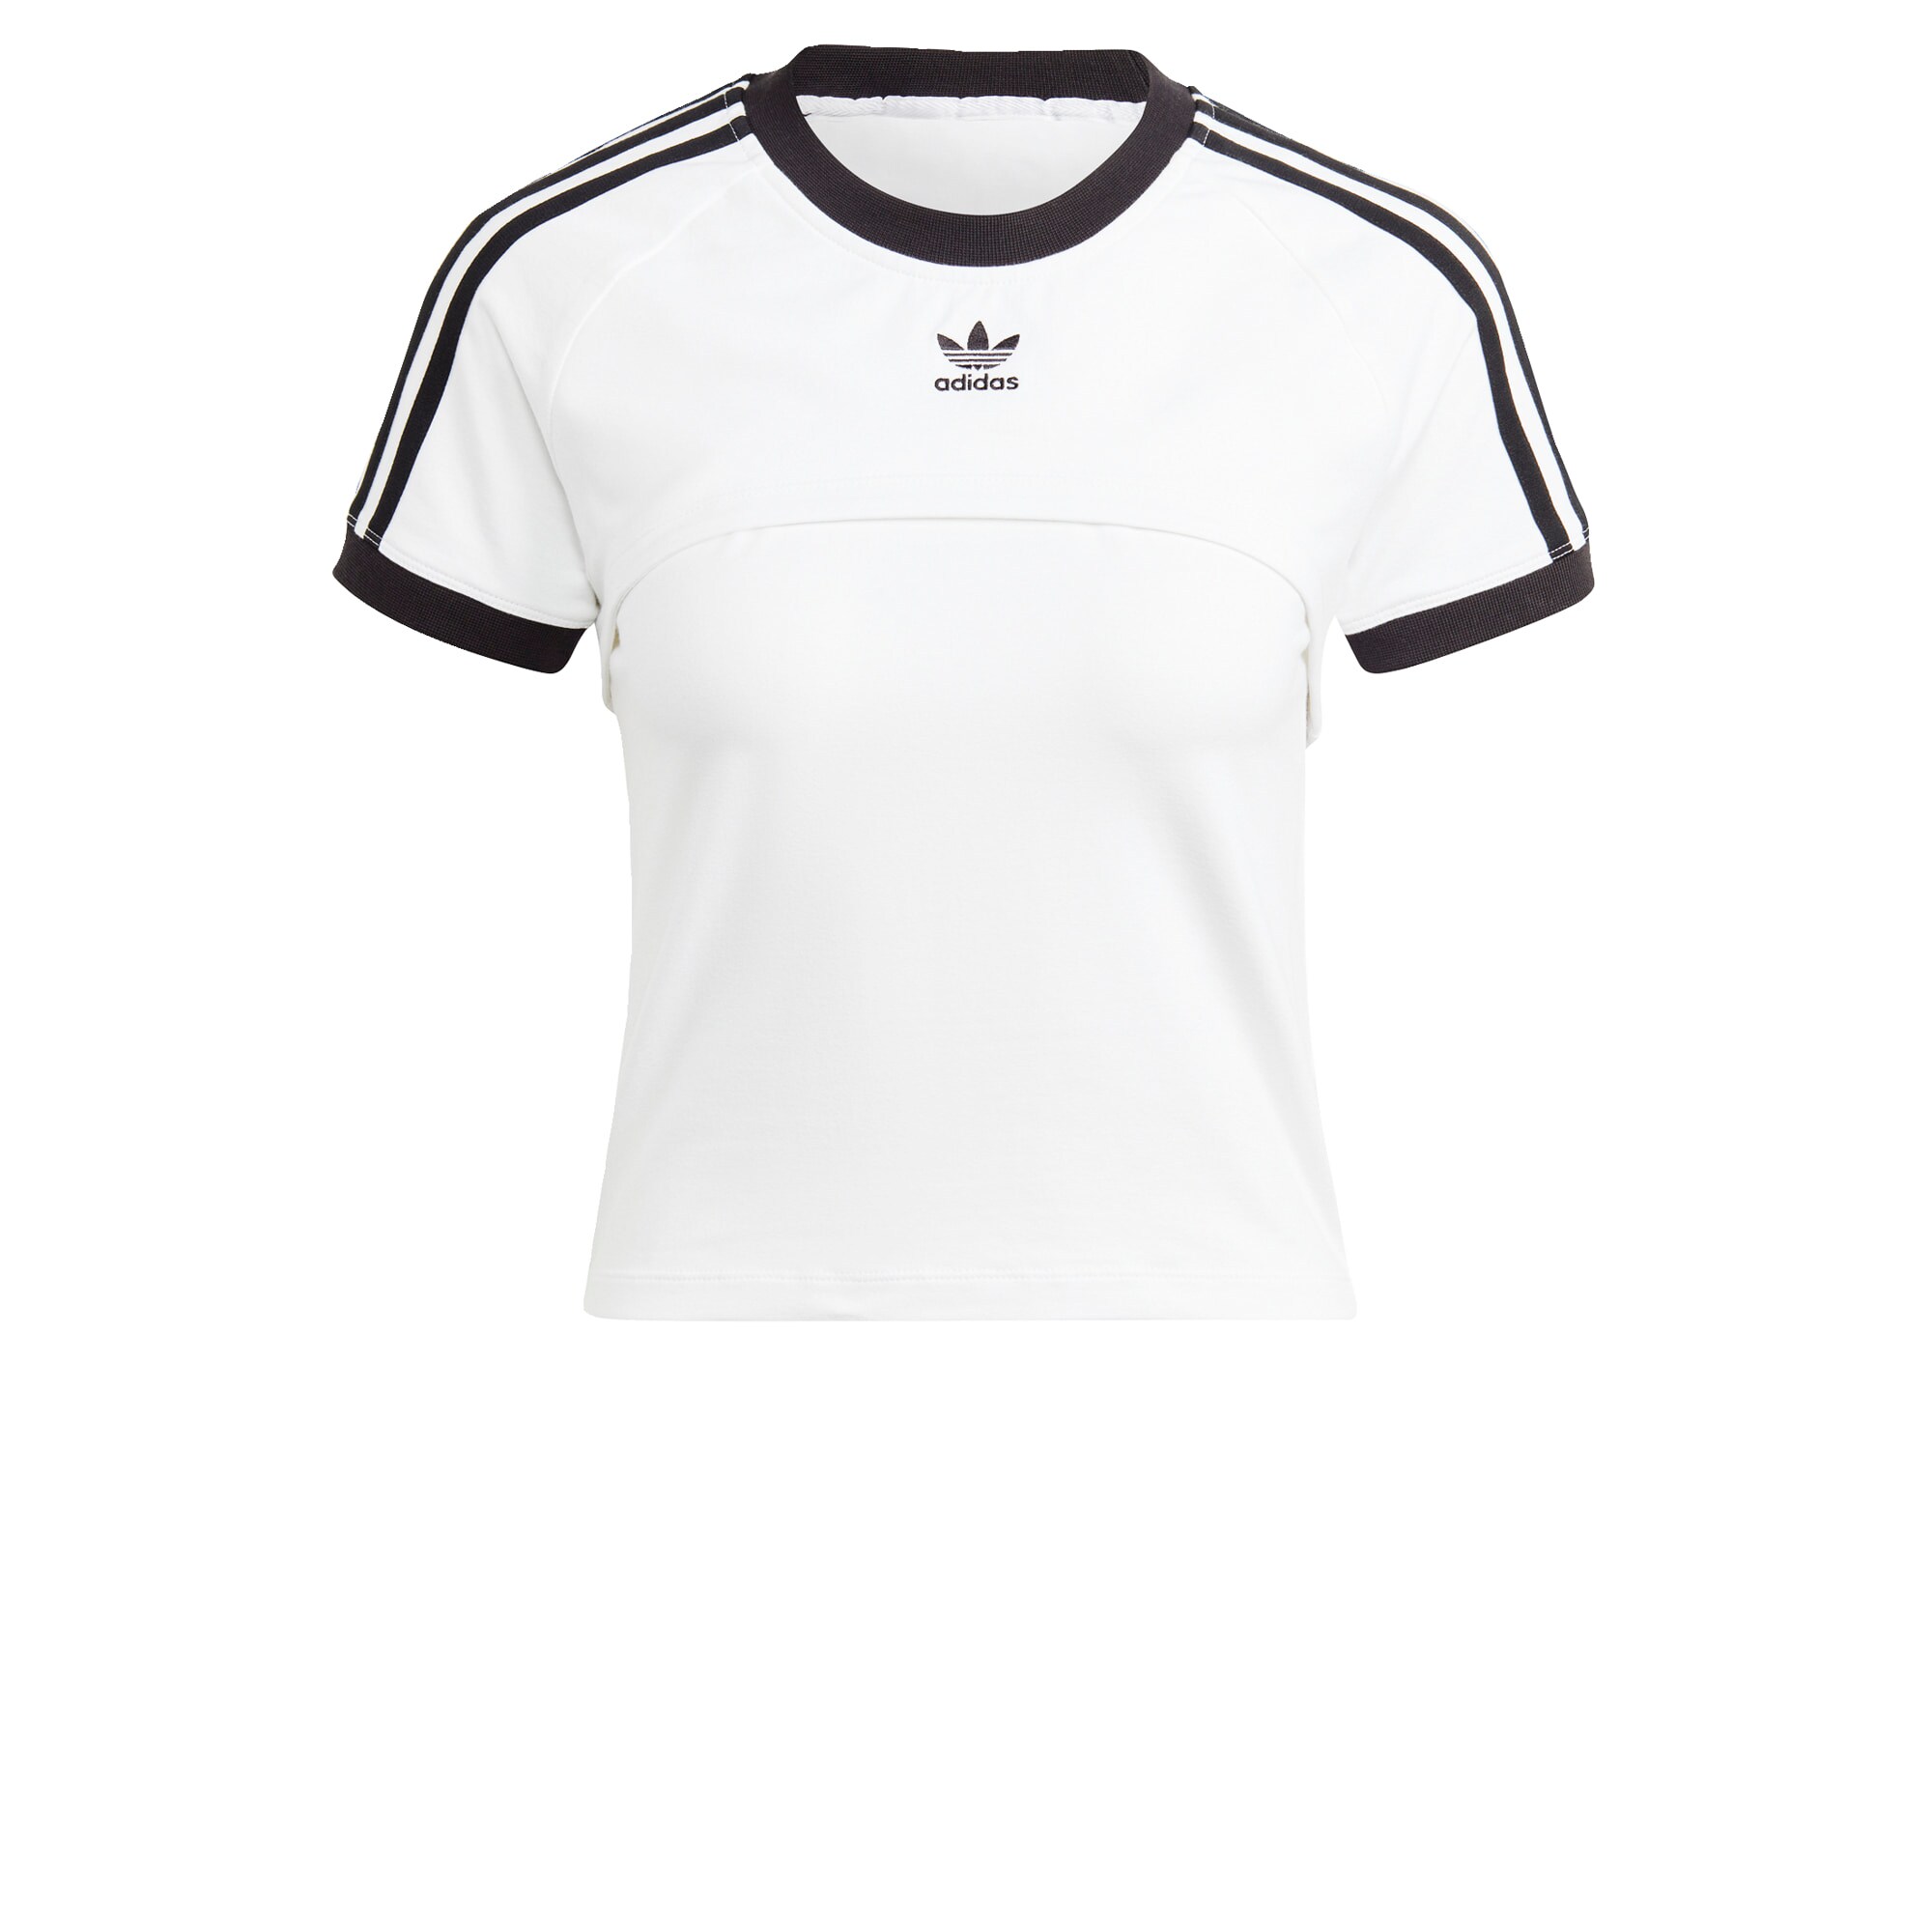 adidas Originals ADIDAS ORIGINALS Shirt schwarz / weiß